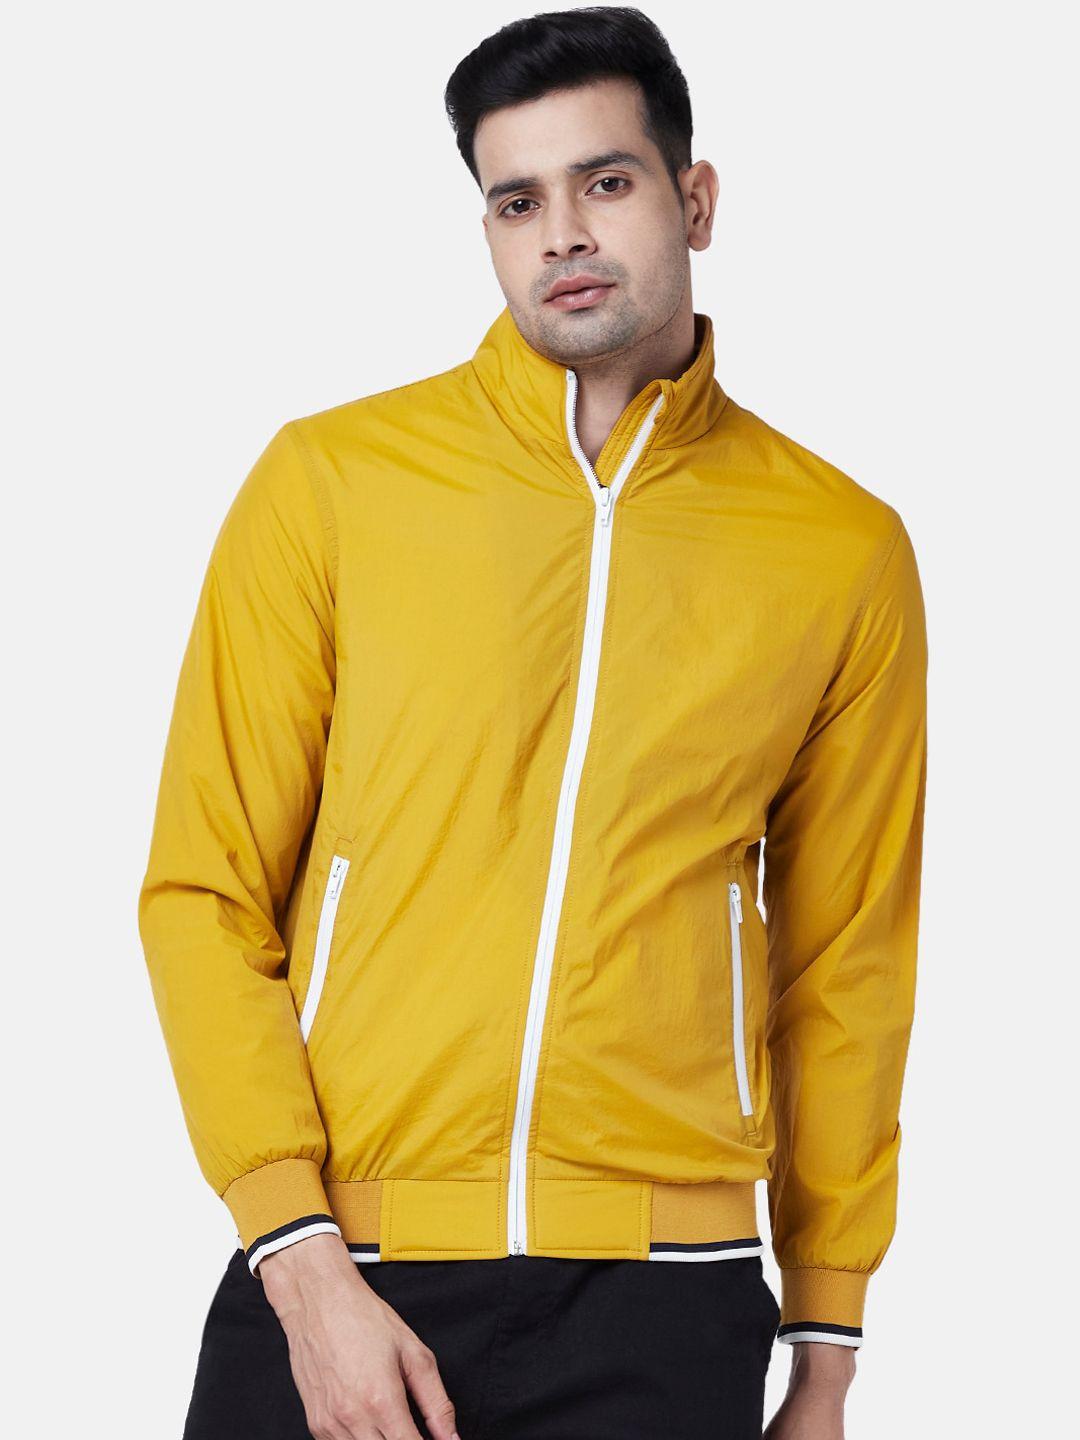 urban-ranger-by-pantaloons-men-mustard-bomber-jacket